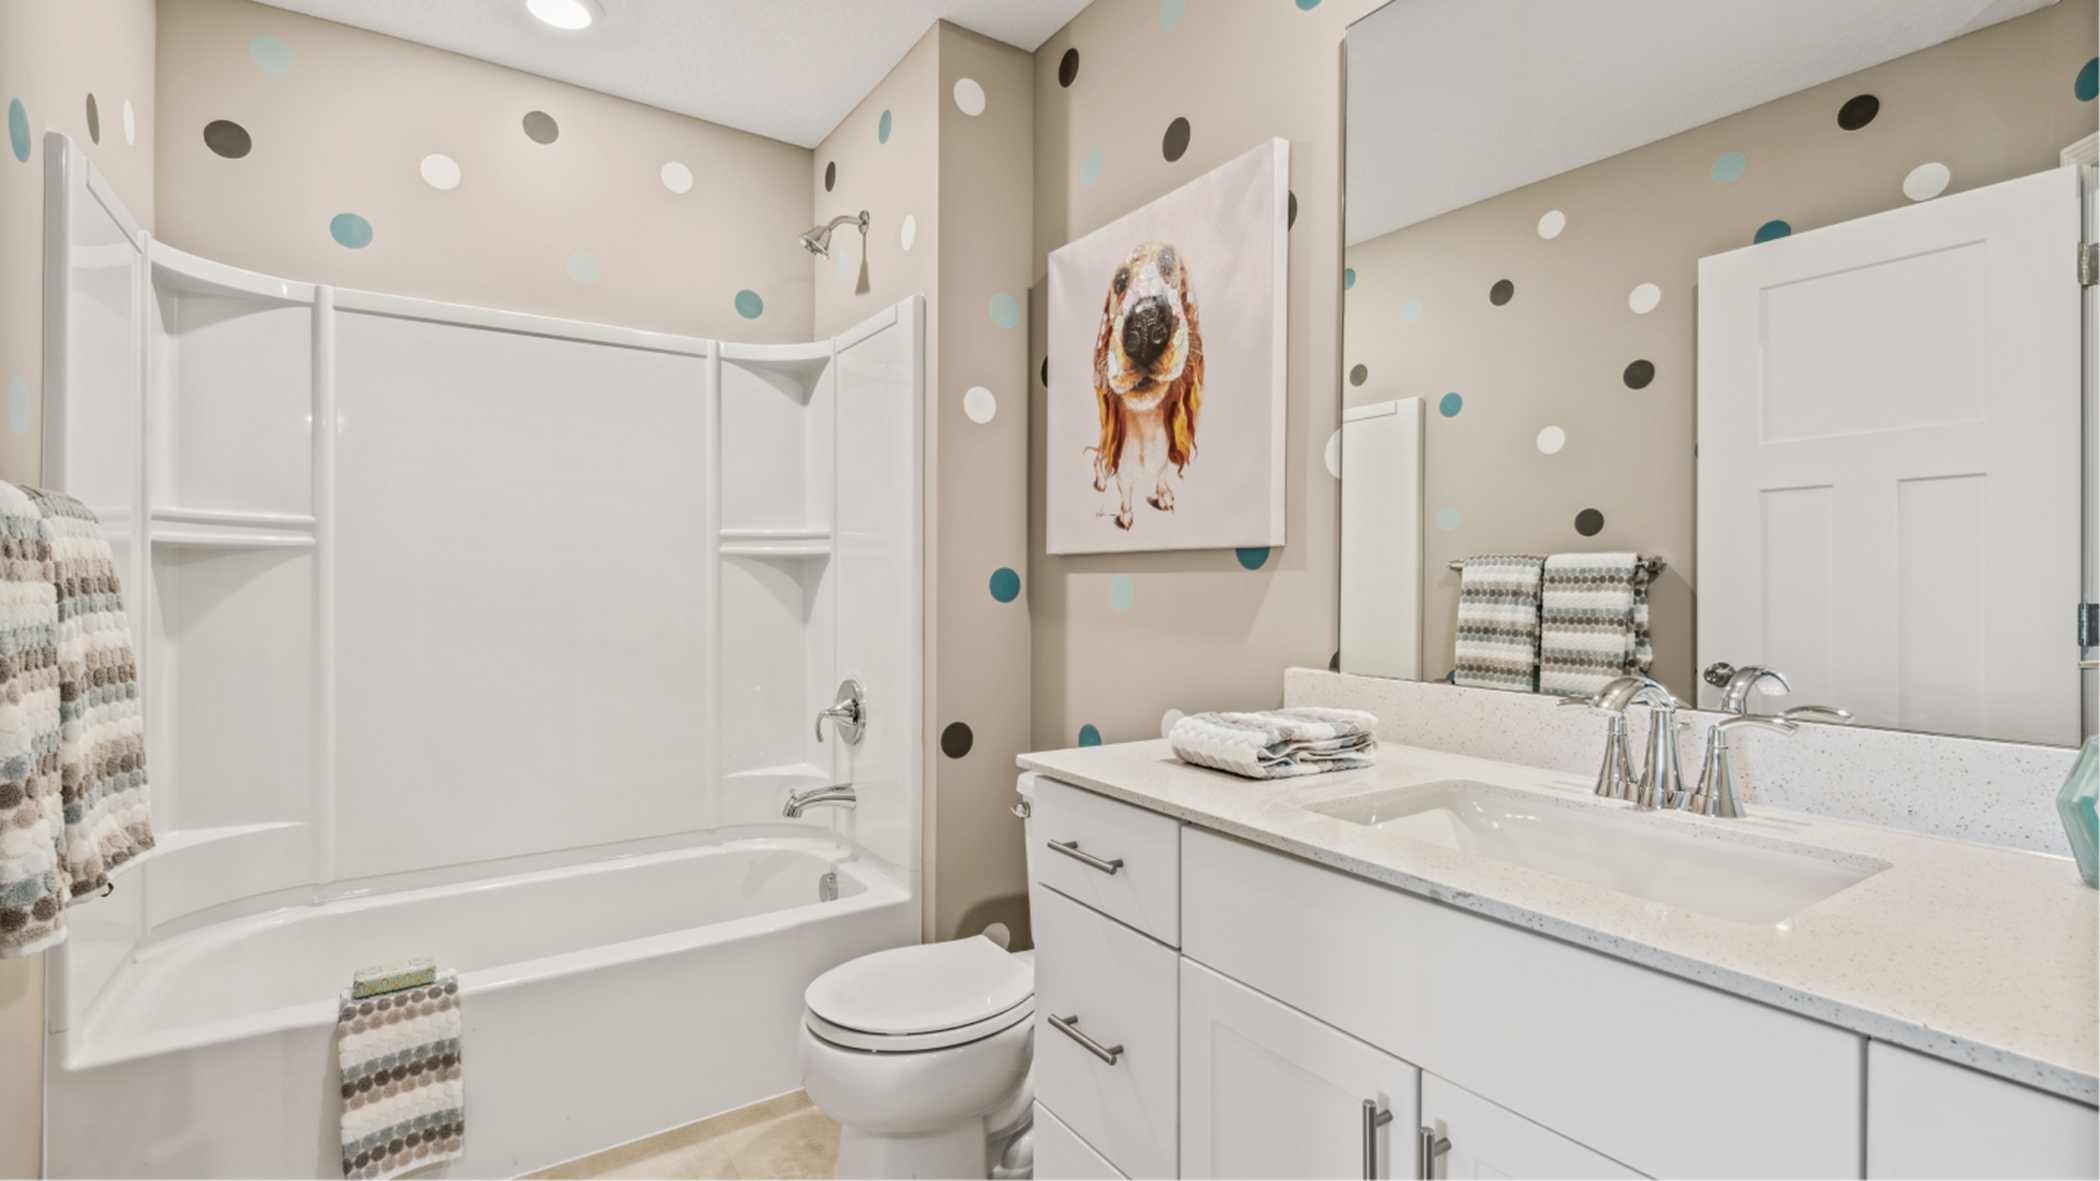 St Croix Bathroom vanity and shower